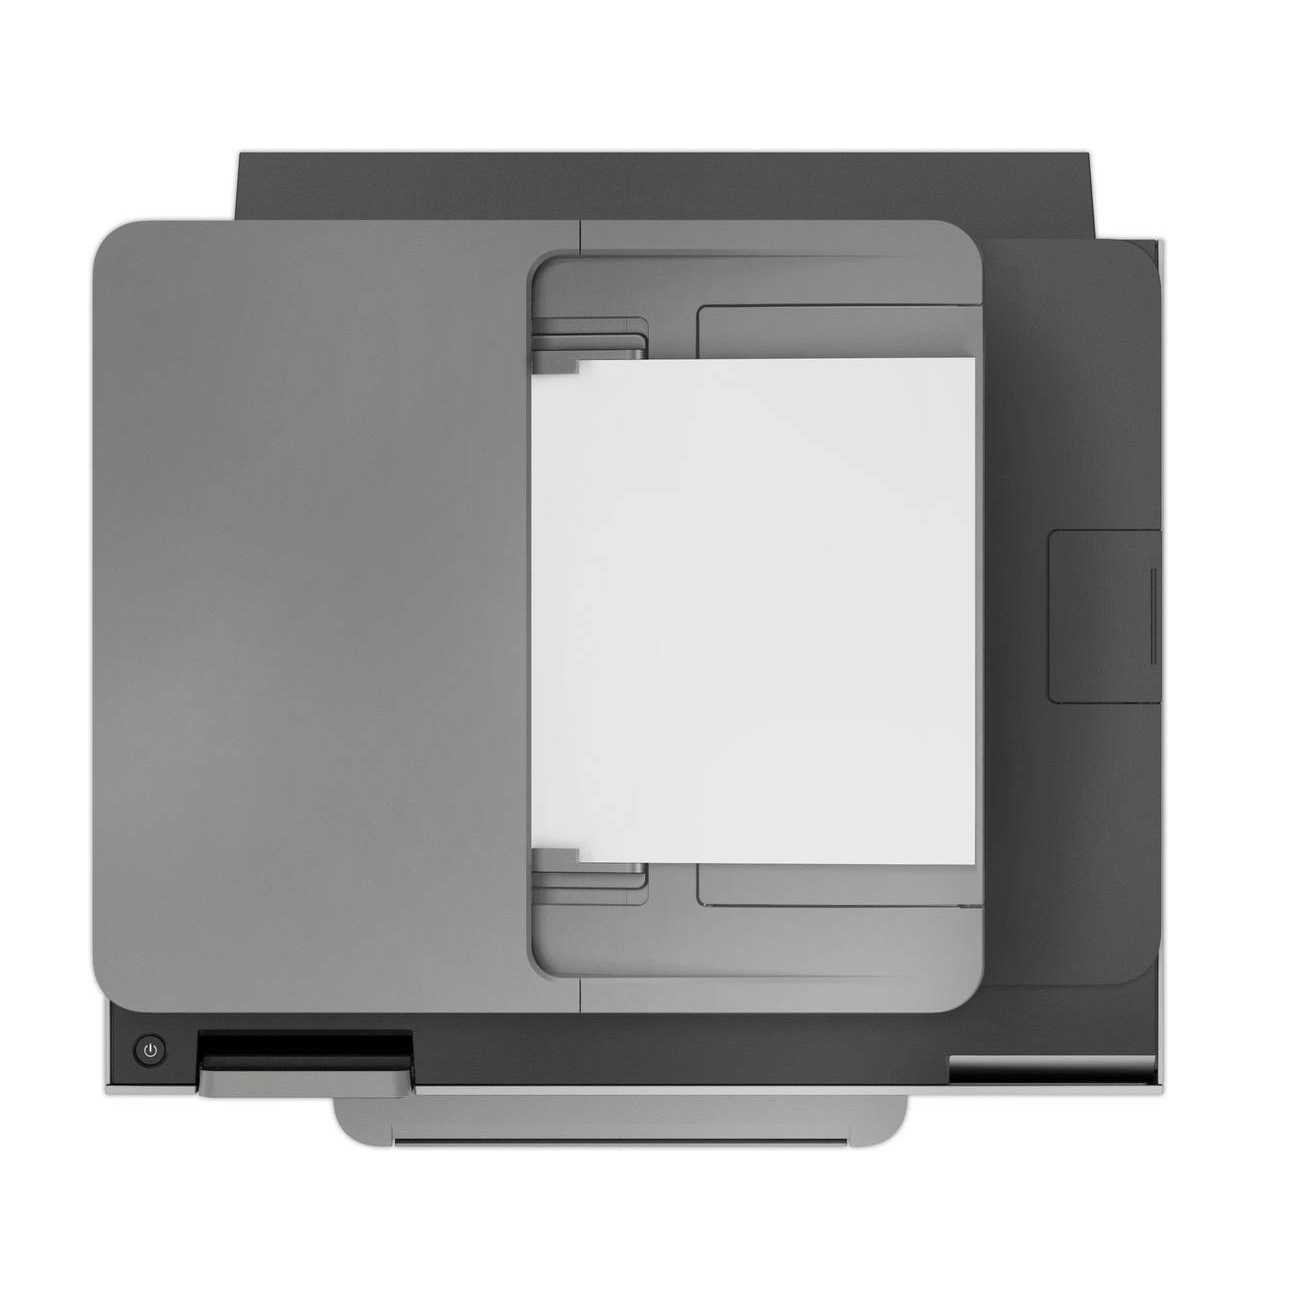 HP Impresora multifuncional, imprime, copia, escanea y fax, impresión desde  dispositivo móvil, pantalla Lcd, doble cara automática, alimentador  automático officejet 4652